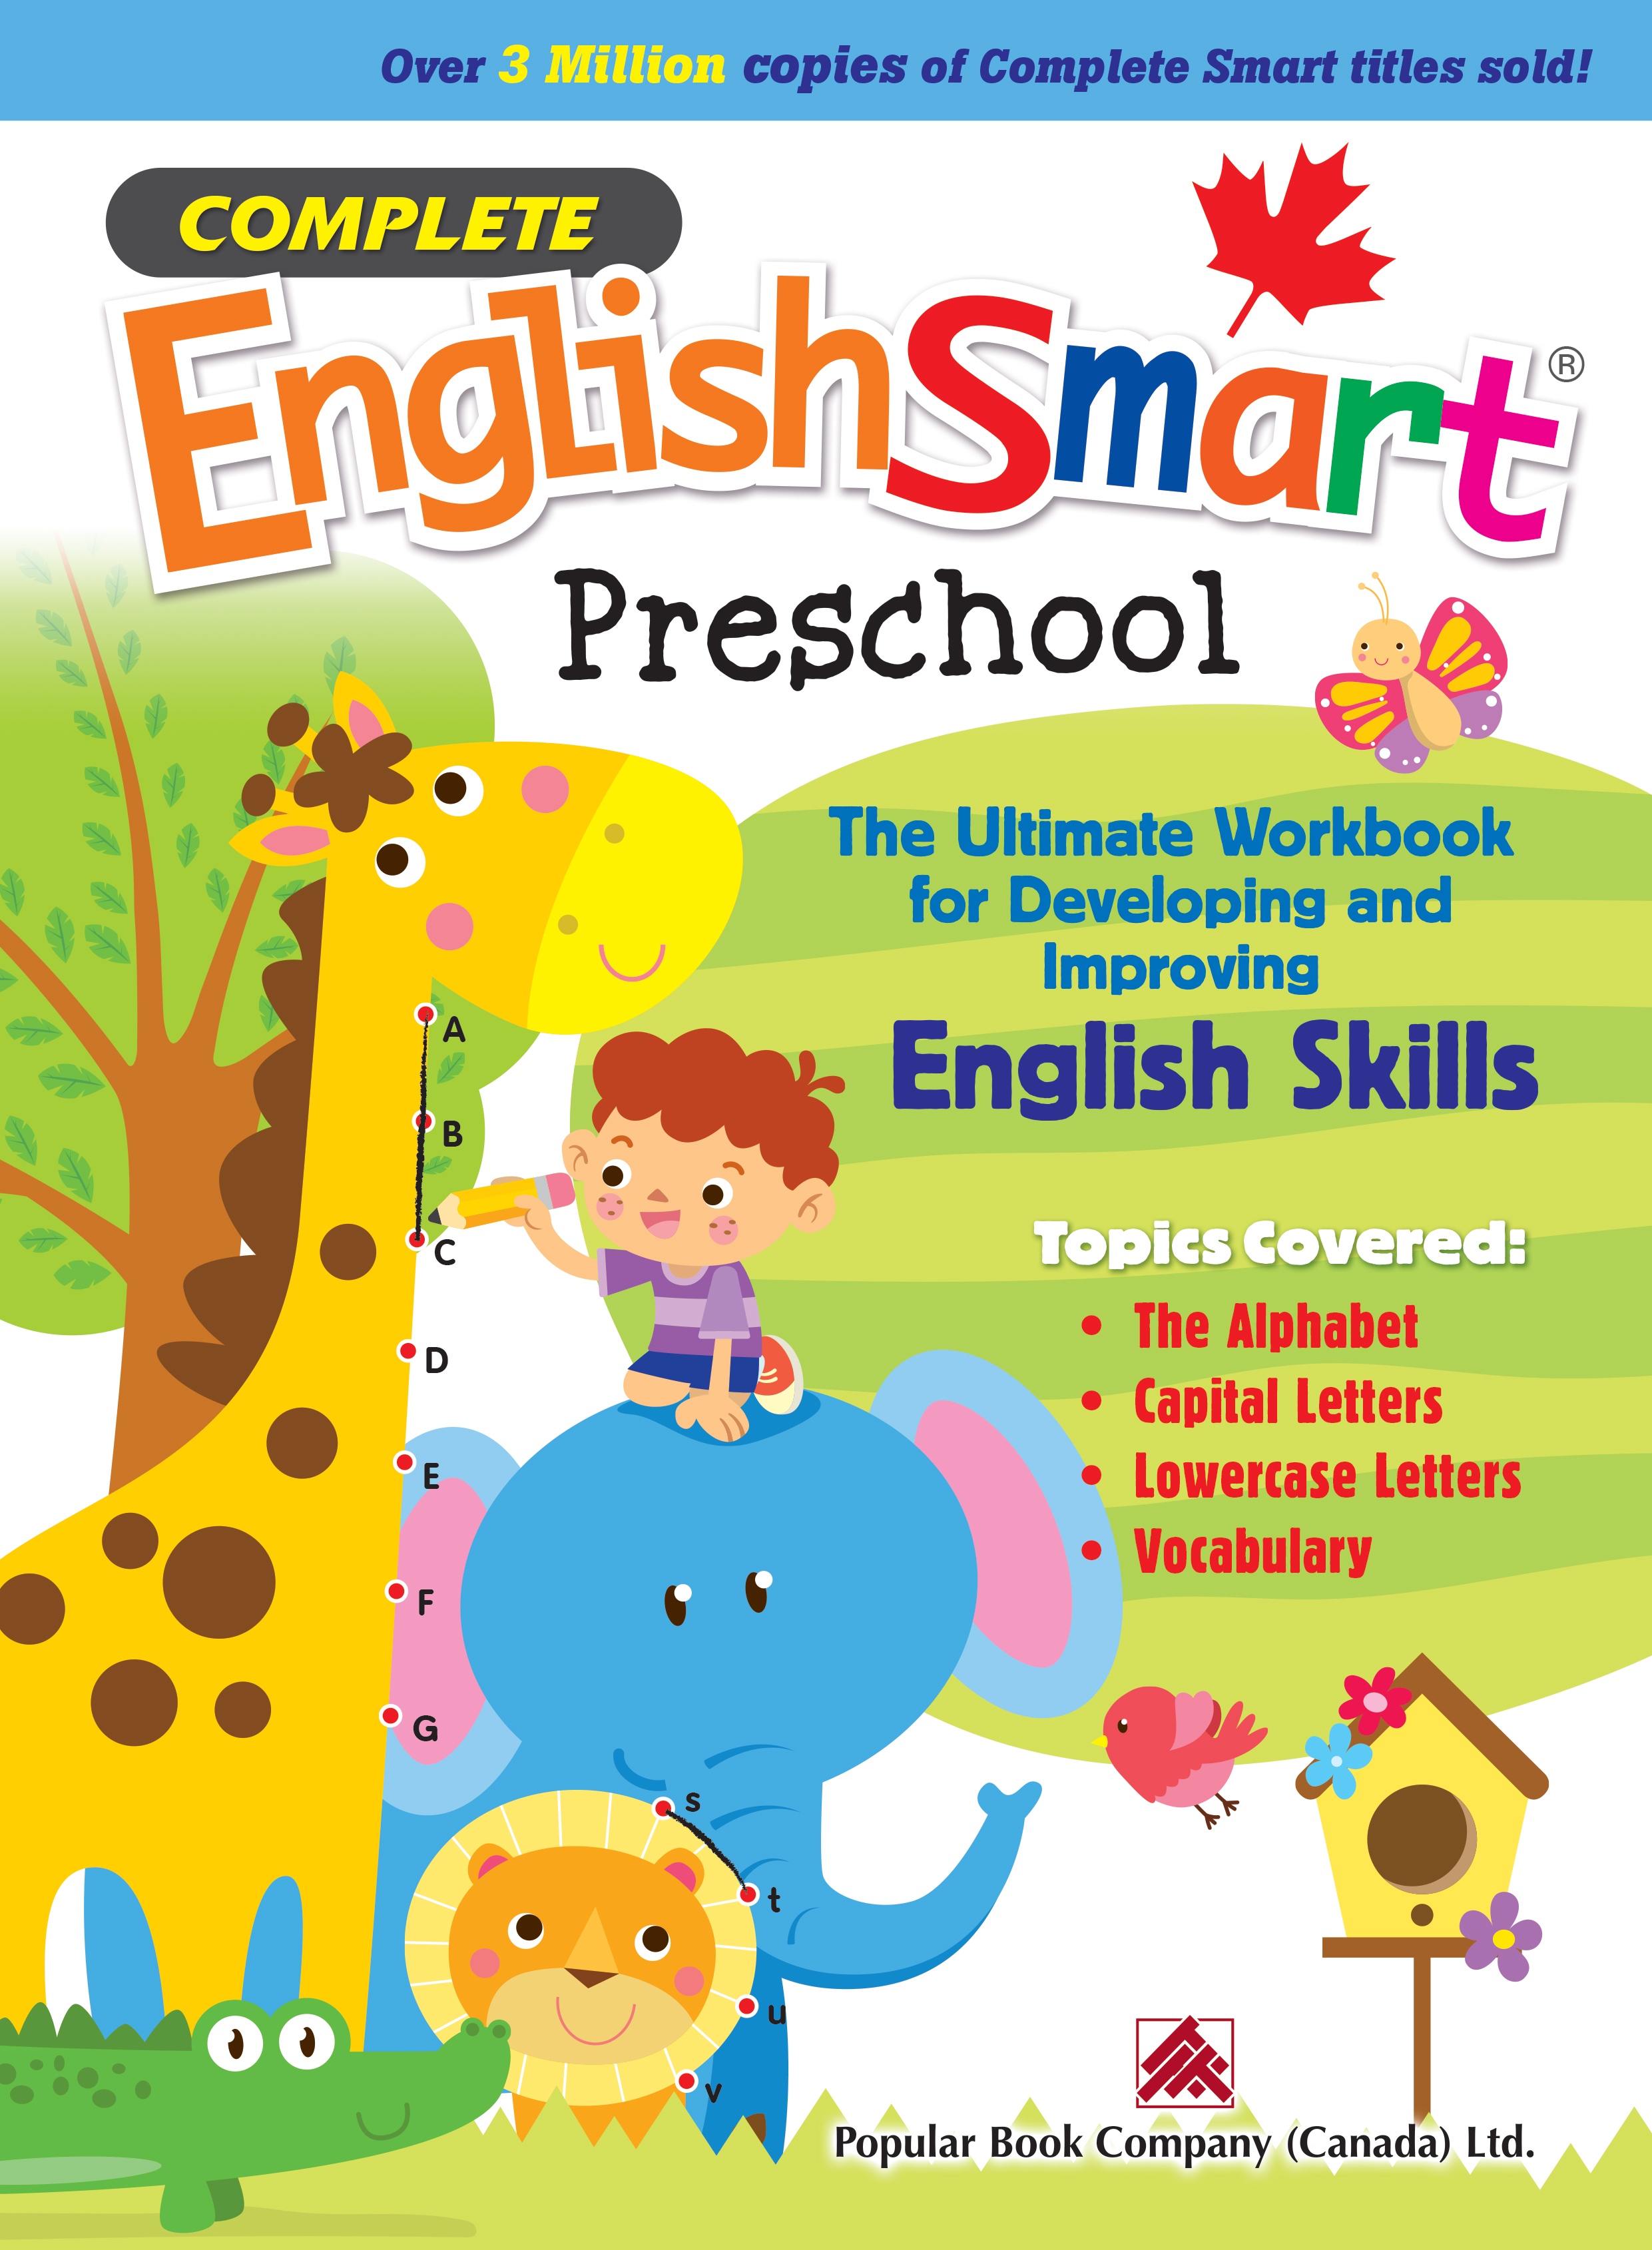 Complete Englishsmart Preschool Book Popular Book Company Canada Ltd 3012